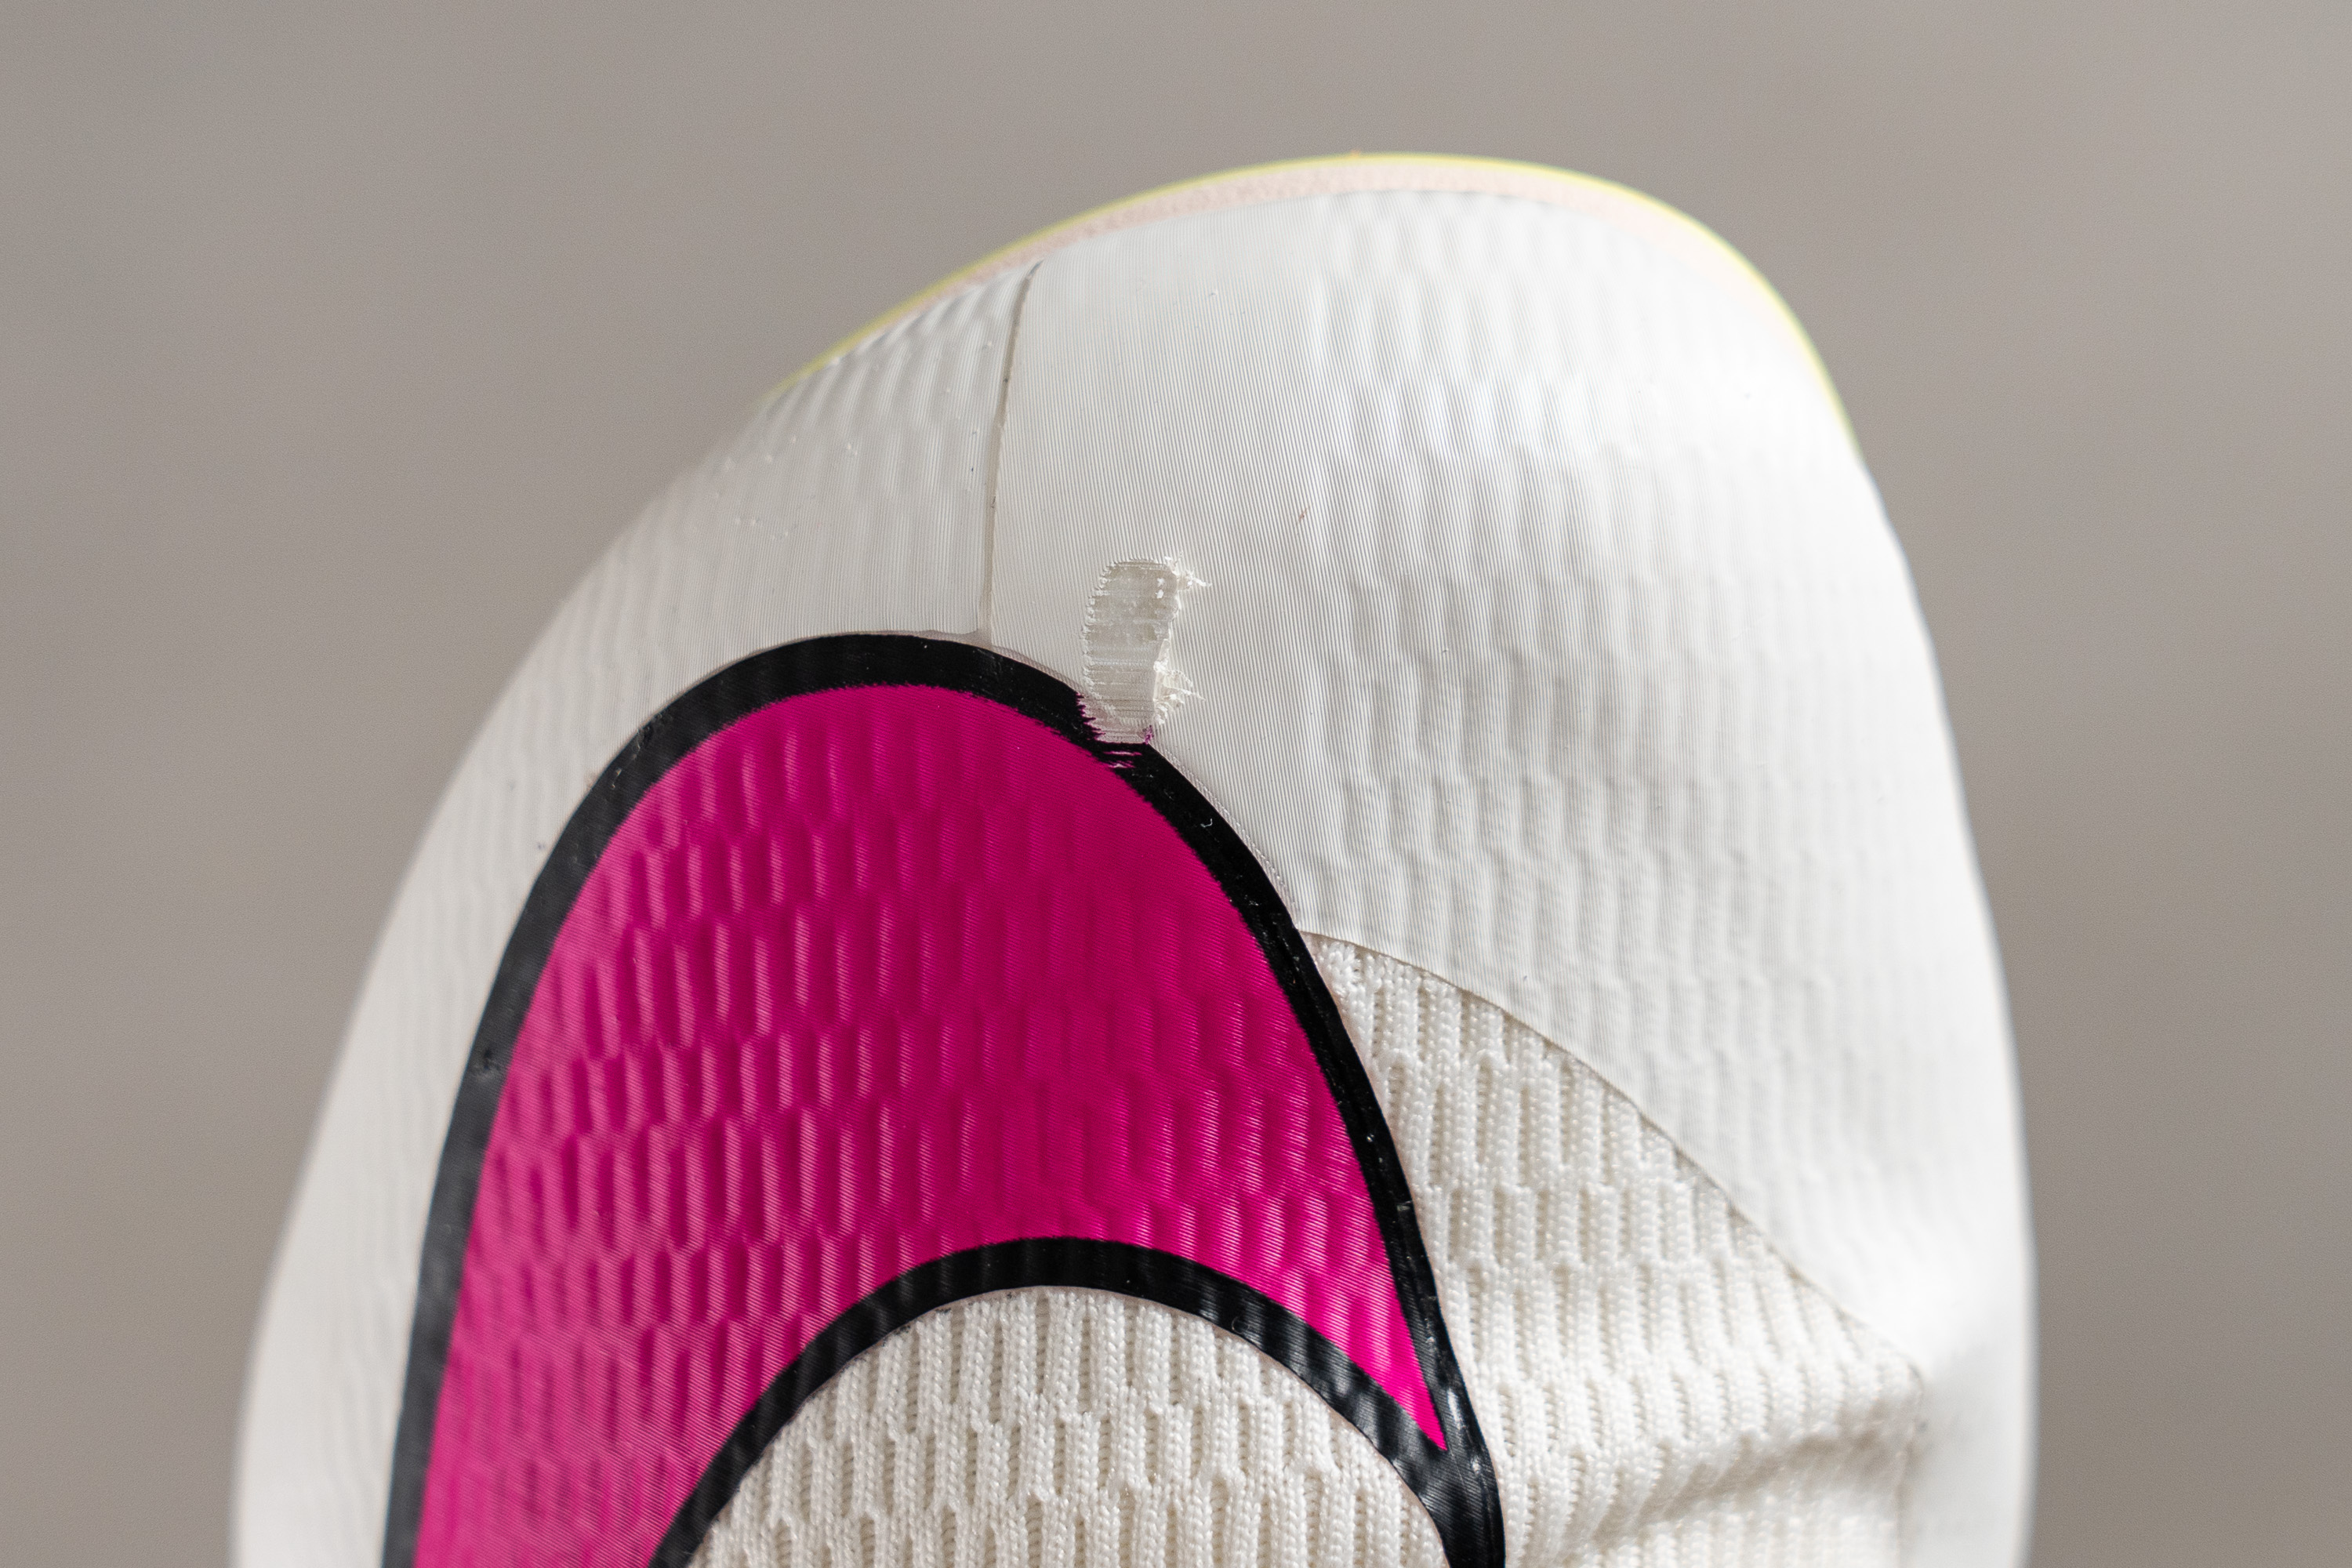 Nike Rival Sprint Toebox durability